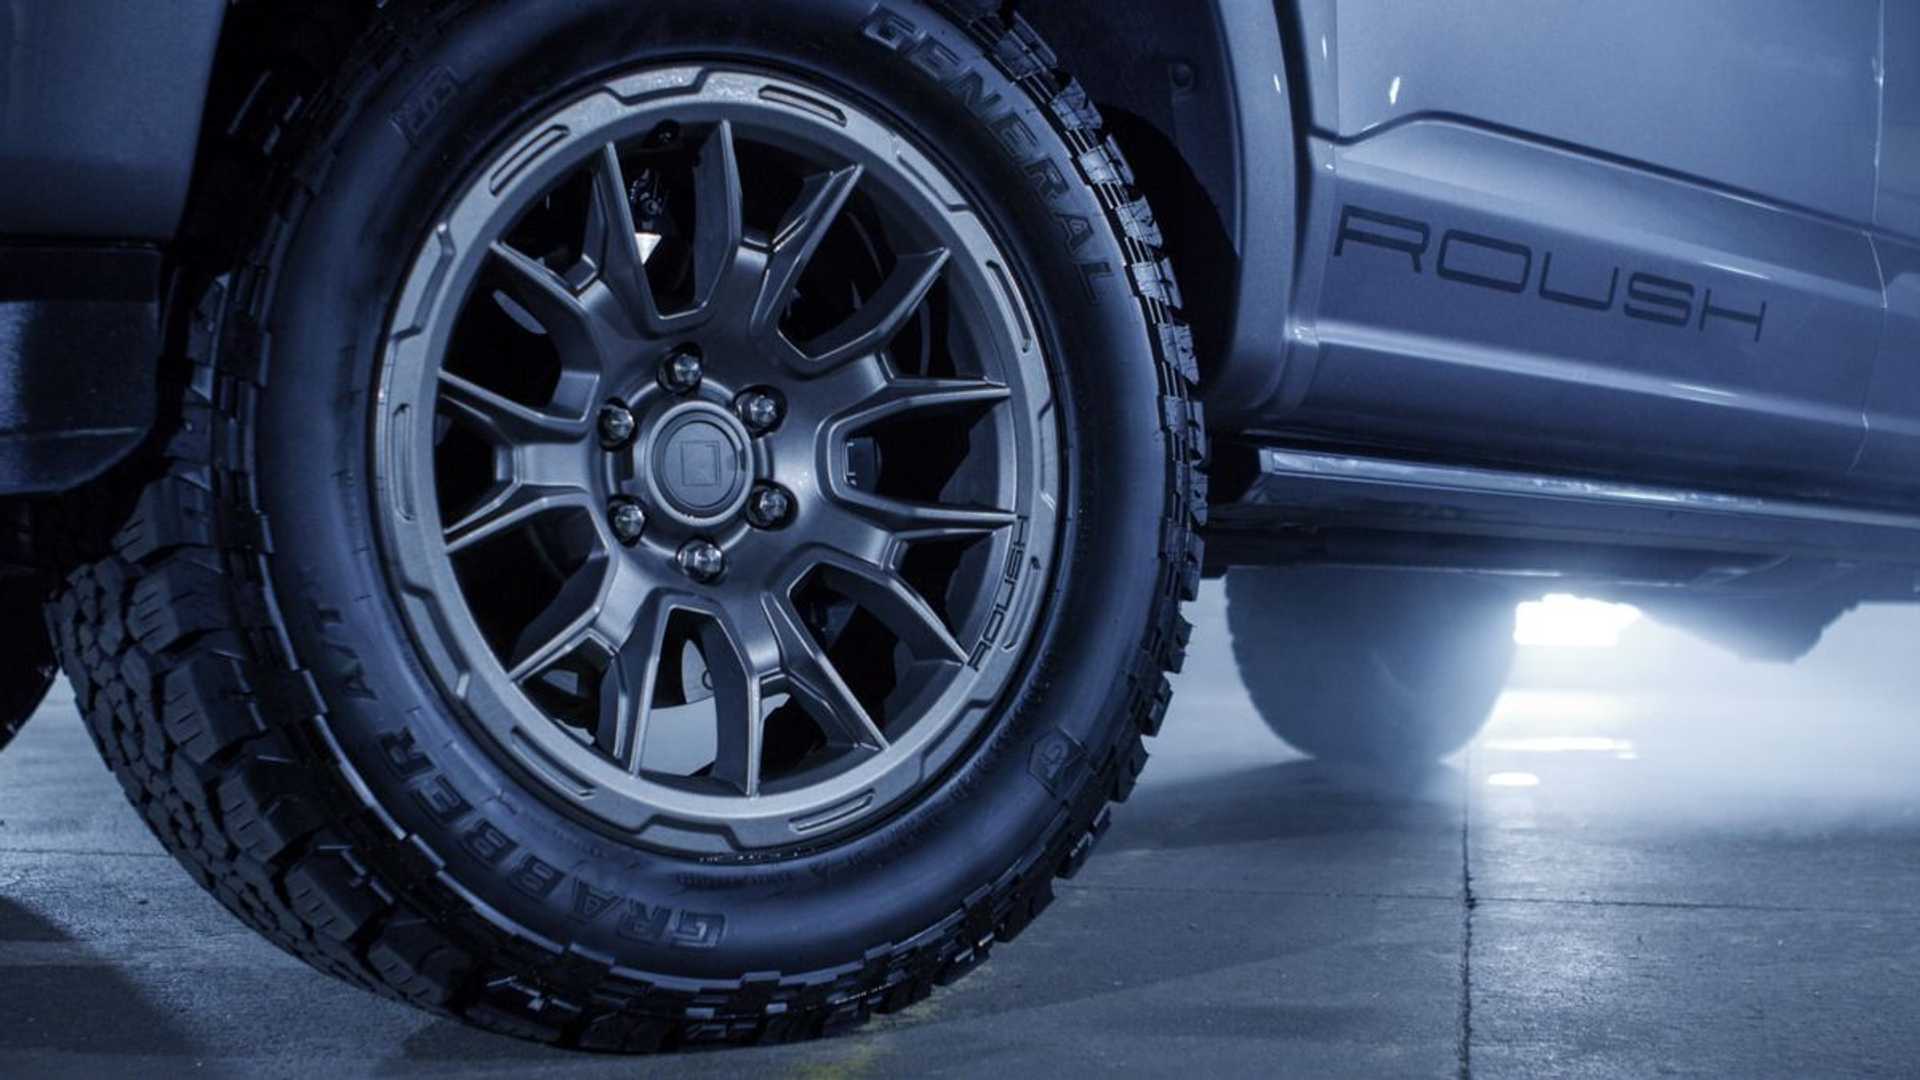 2021 Roush Ford F-150 wheels